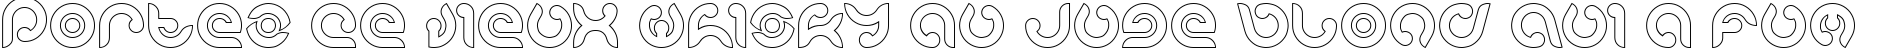 Пример написания шрифтом KIOSHIMA-Outlined текста на французском